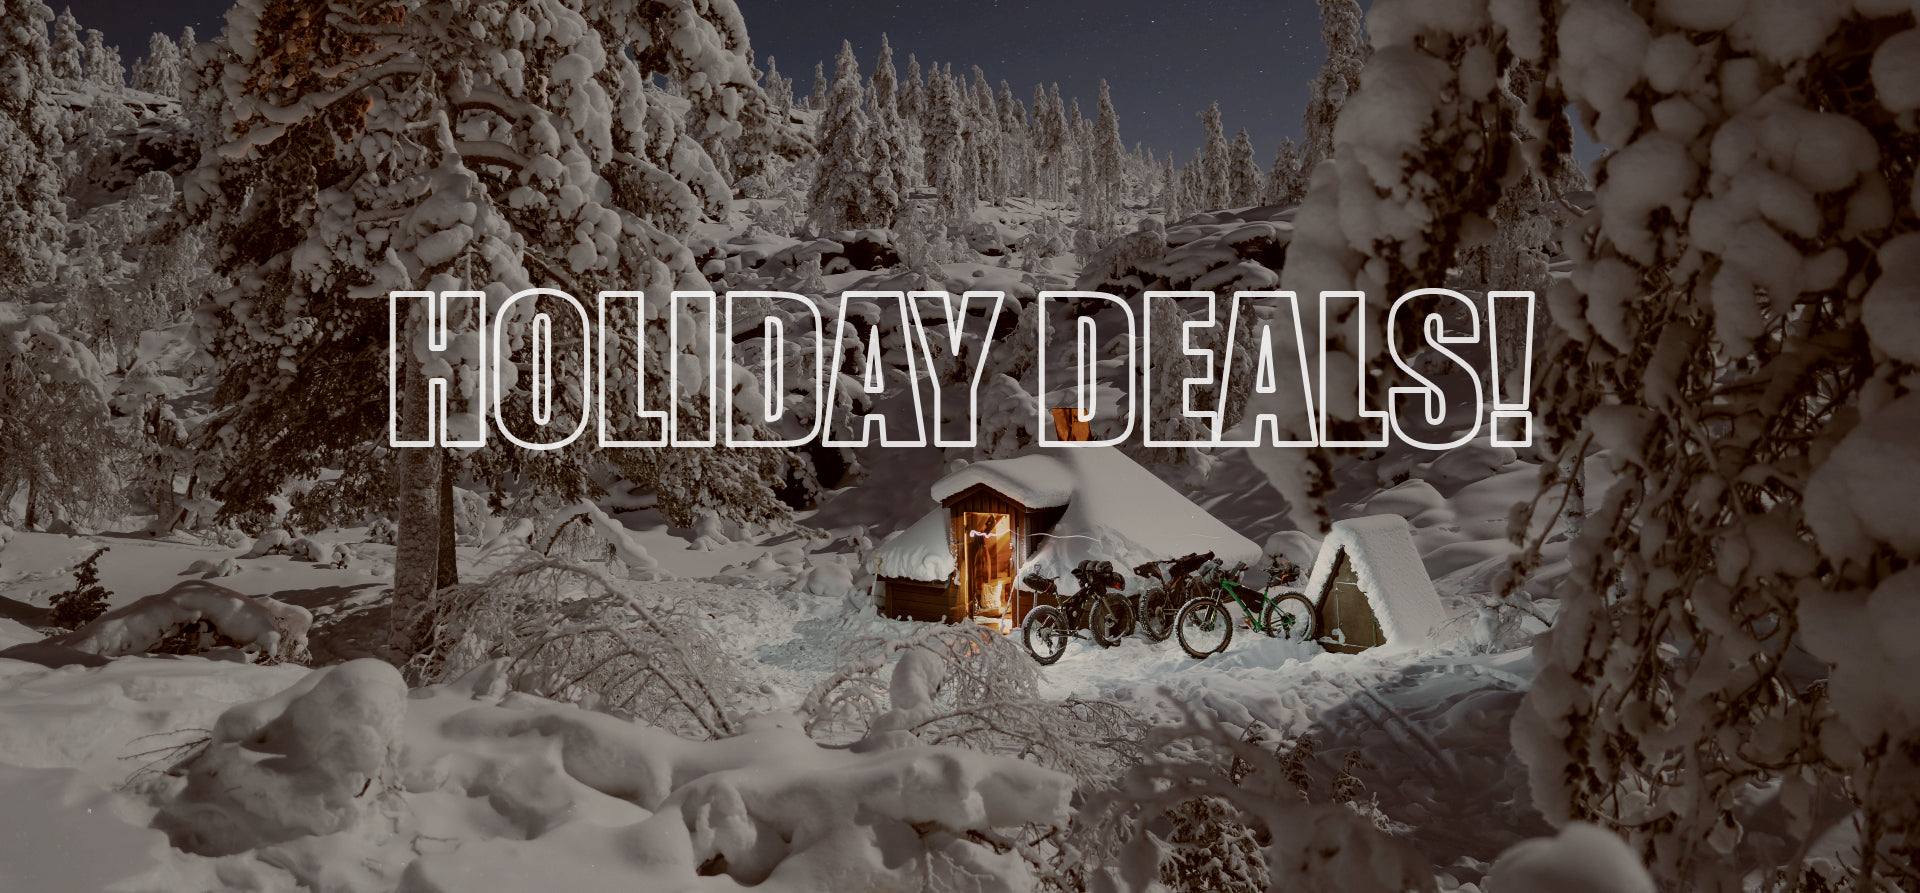 Holiday Deals!